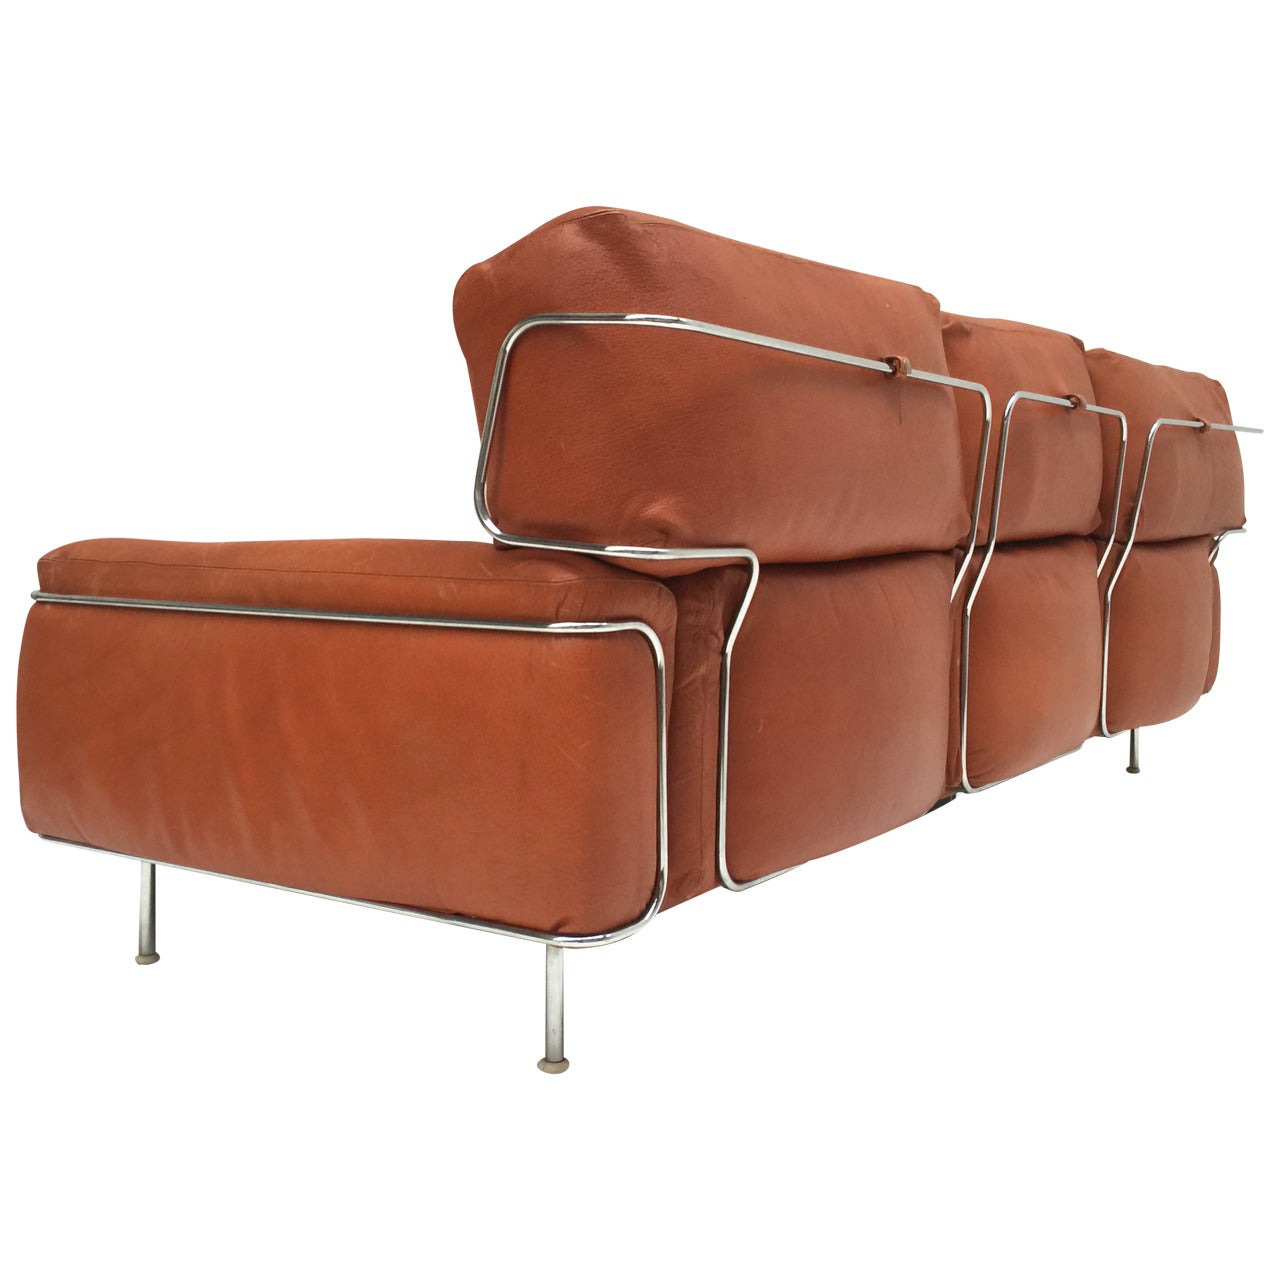 Rare Three-Seat Leather Sofa by Vittorio Introini for Saporiti, 1968, Published